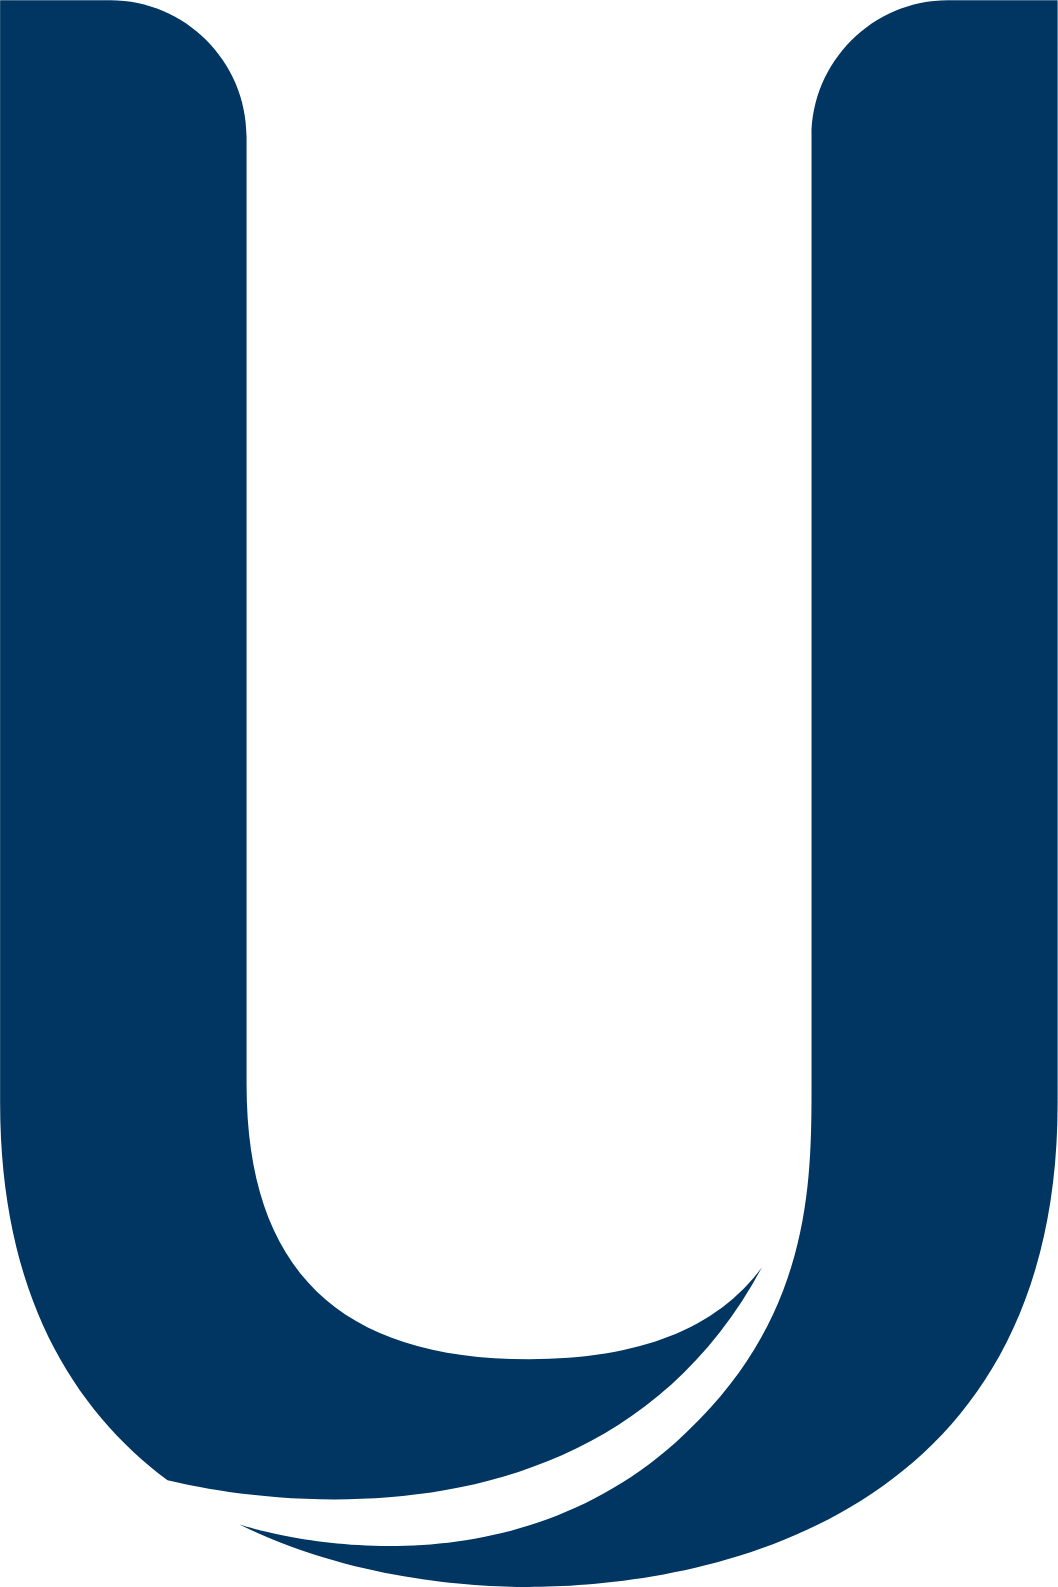 Unipol Gruppo logo (PNG transparent)